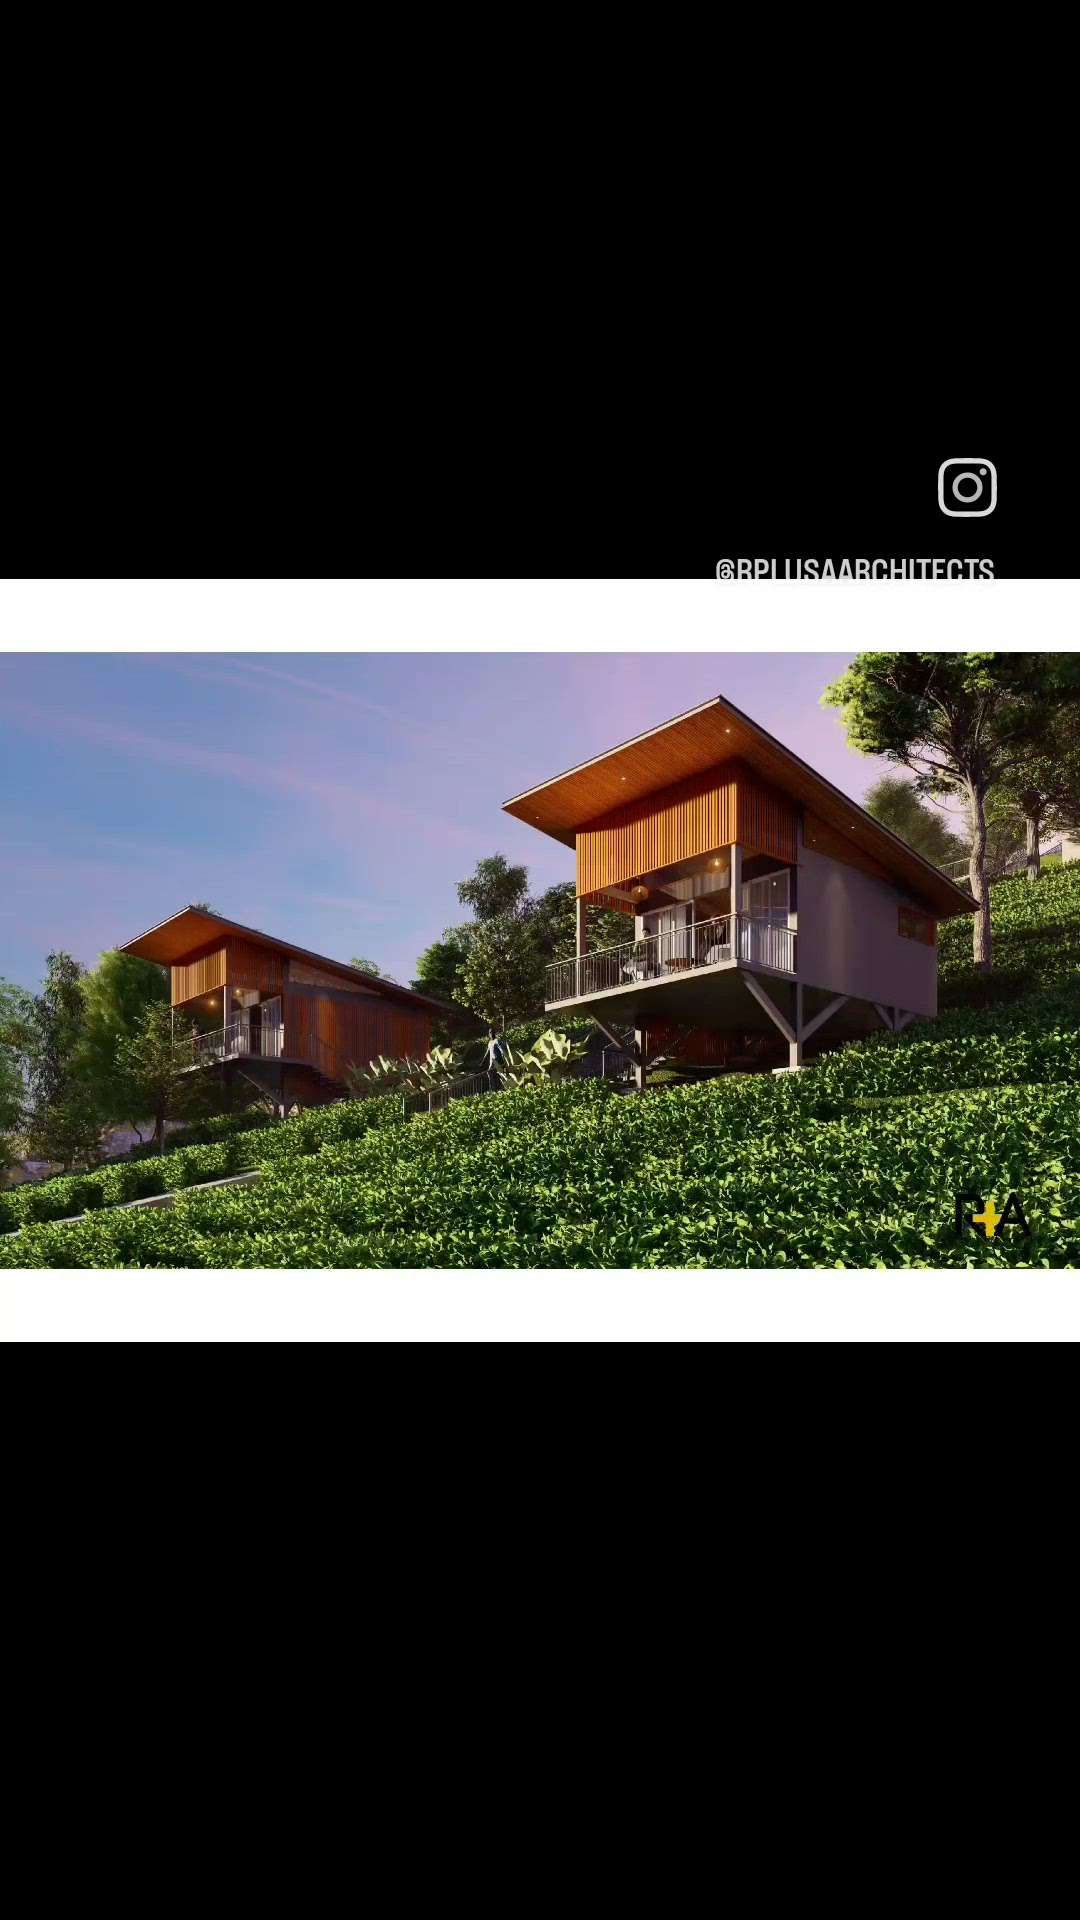 Completed Resort project at vythiri, wayanad 
. 
.
.
.
.
.
#resort  #bestarchitectsinperinthalmanna #bestarchitectinkerala #rplusaarchitects  #R+A Architects #architectsinperinthalmanna #architectsinmalappuram #architectsinkerala #bestarchitectsintamilnadu